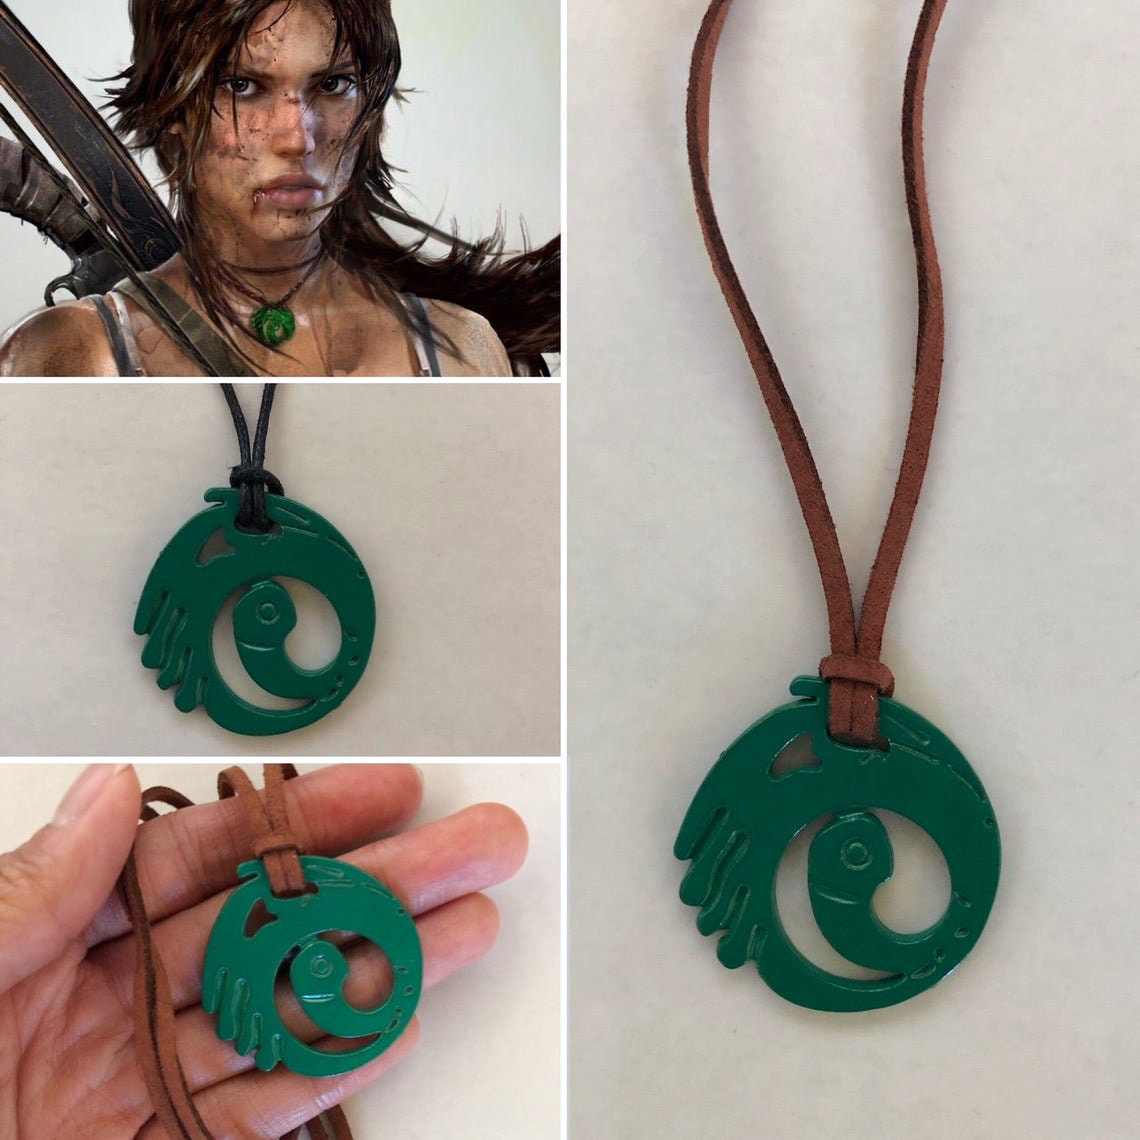 Lara Croft Necklace 